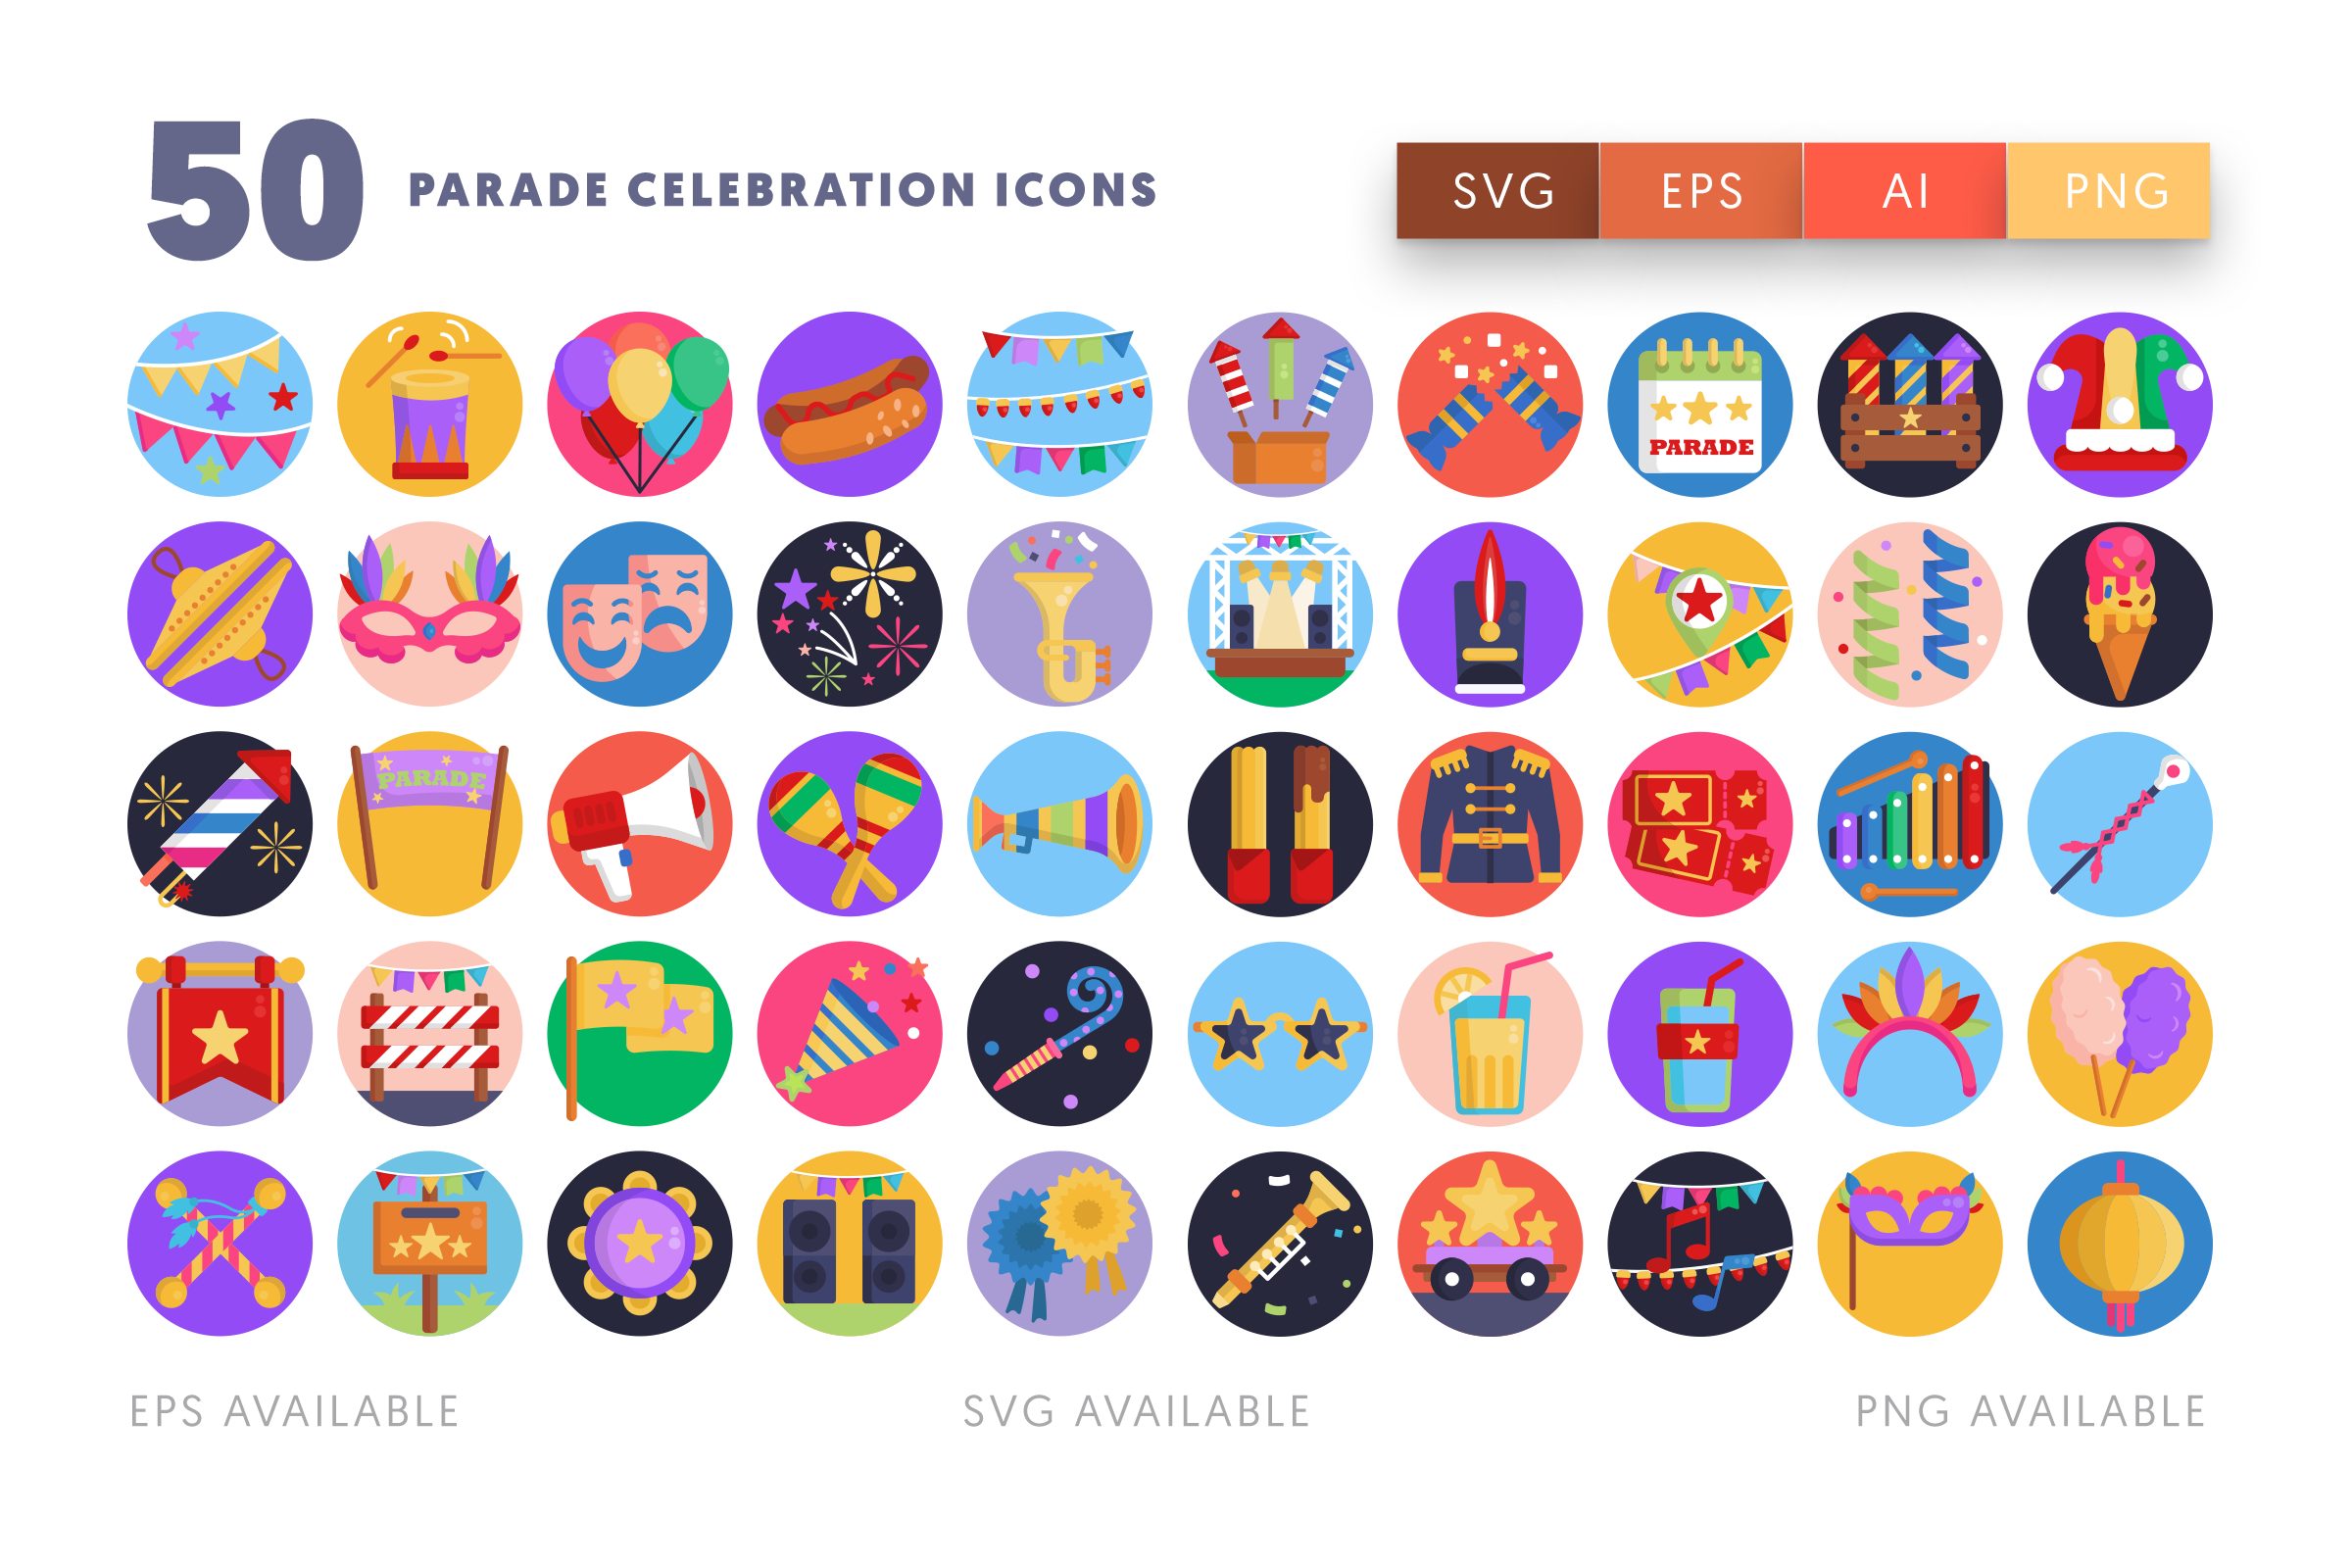 Parade Celebration icons png/svg/eps